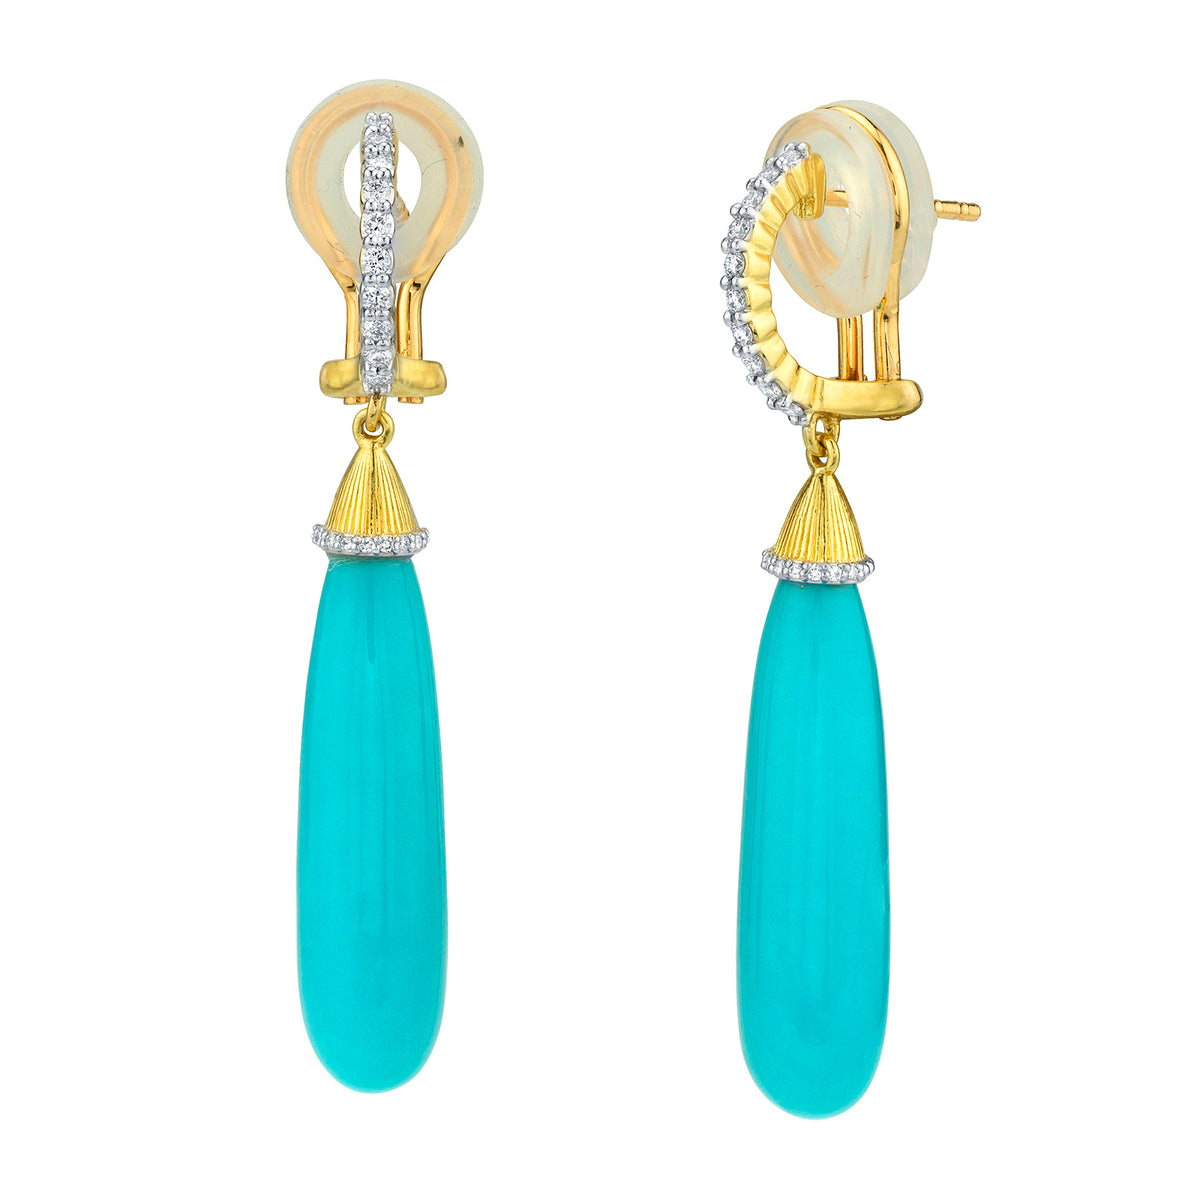 Turquoise and Diamond Drop Earrings by Sloane Street | Diamond